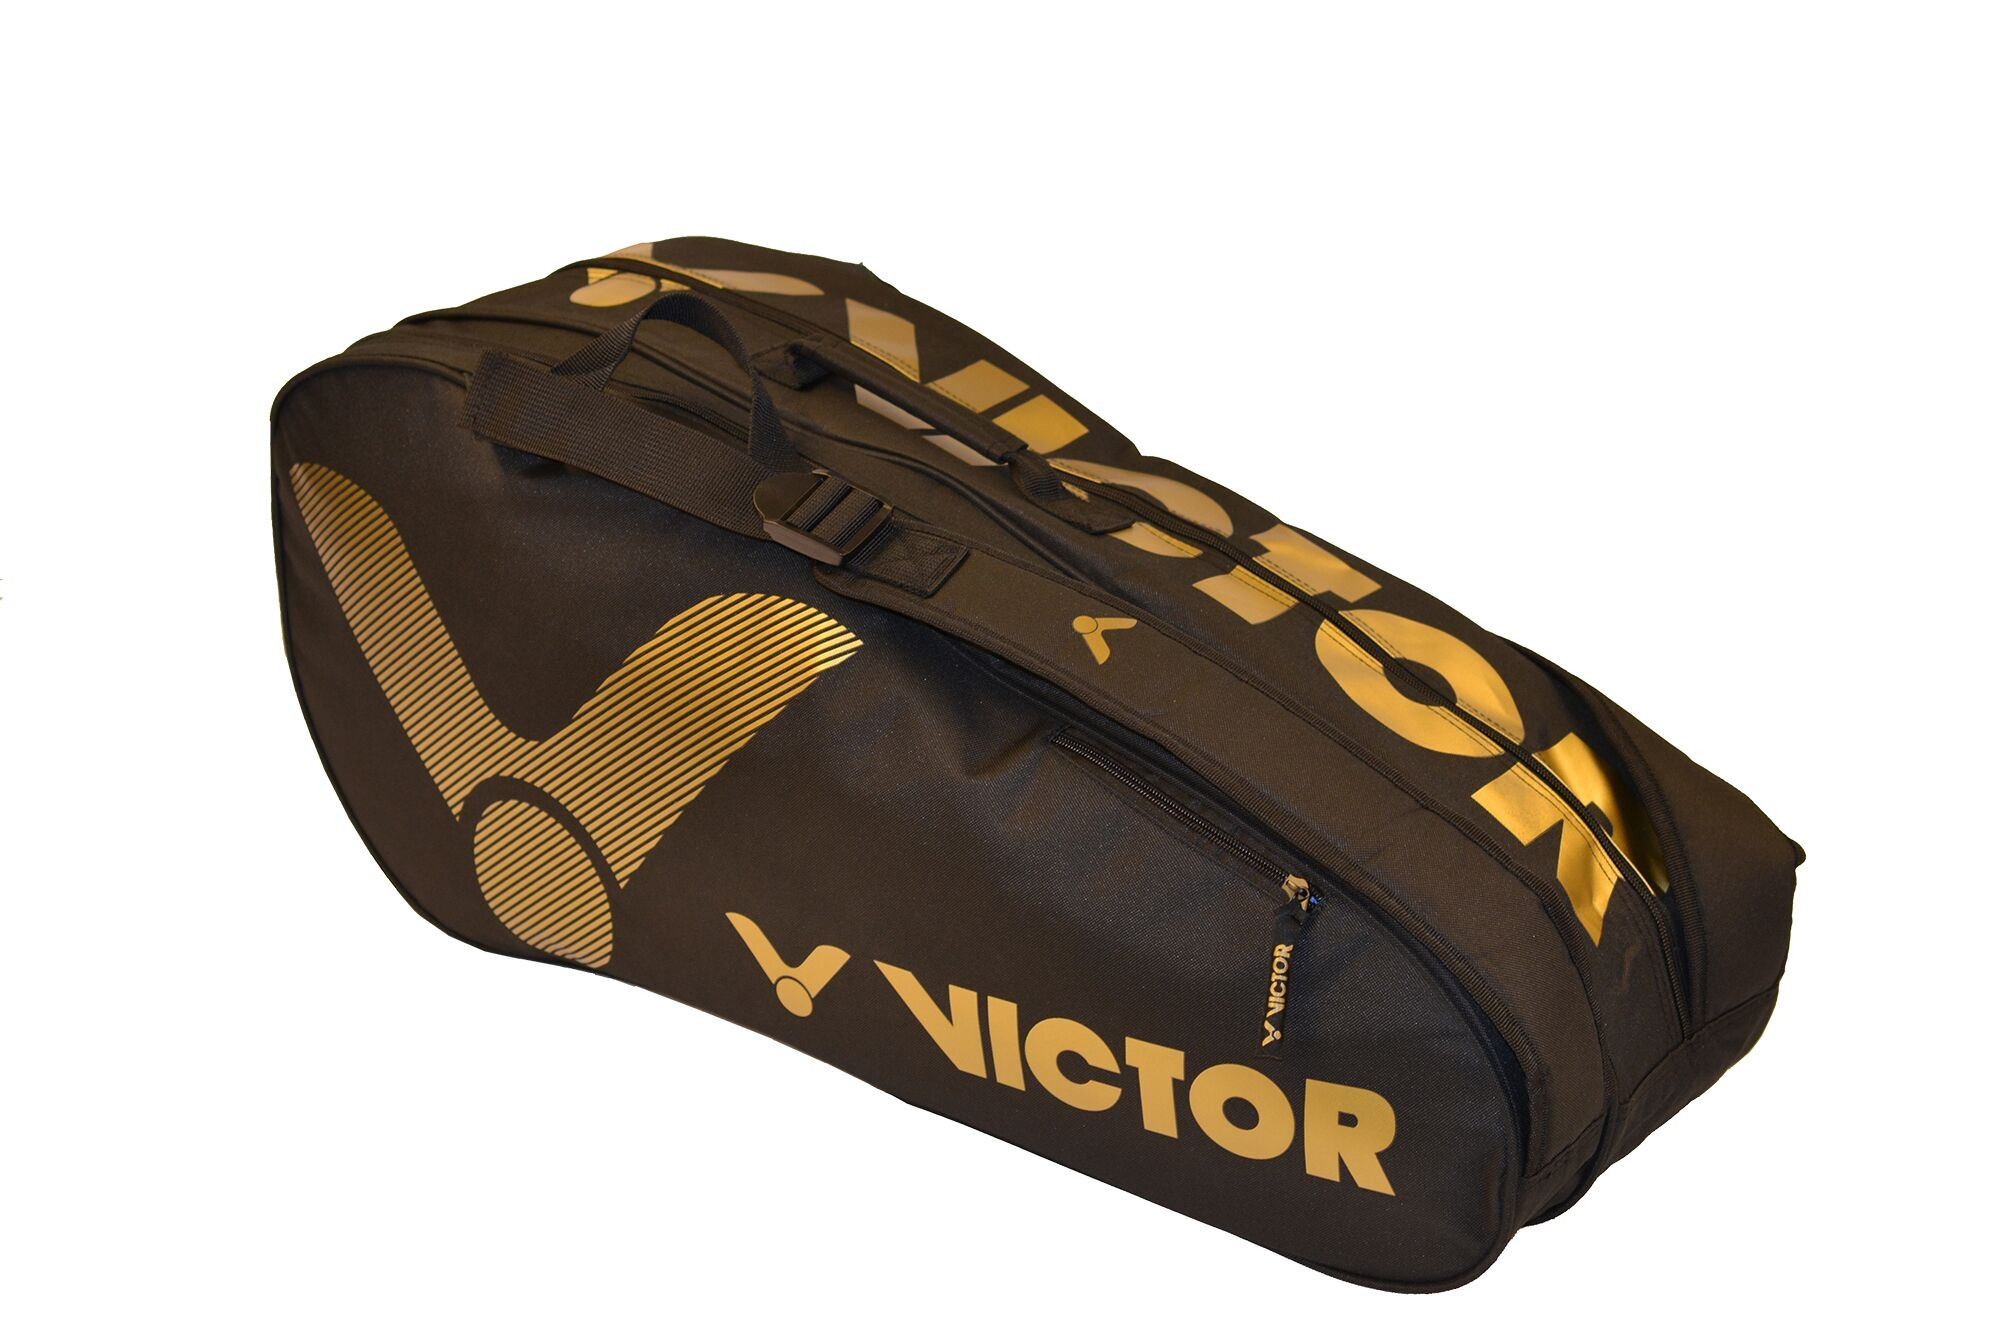 Victor Doublethermobag Basic LTD  Badminton Tasche 